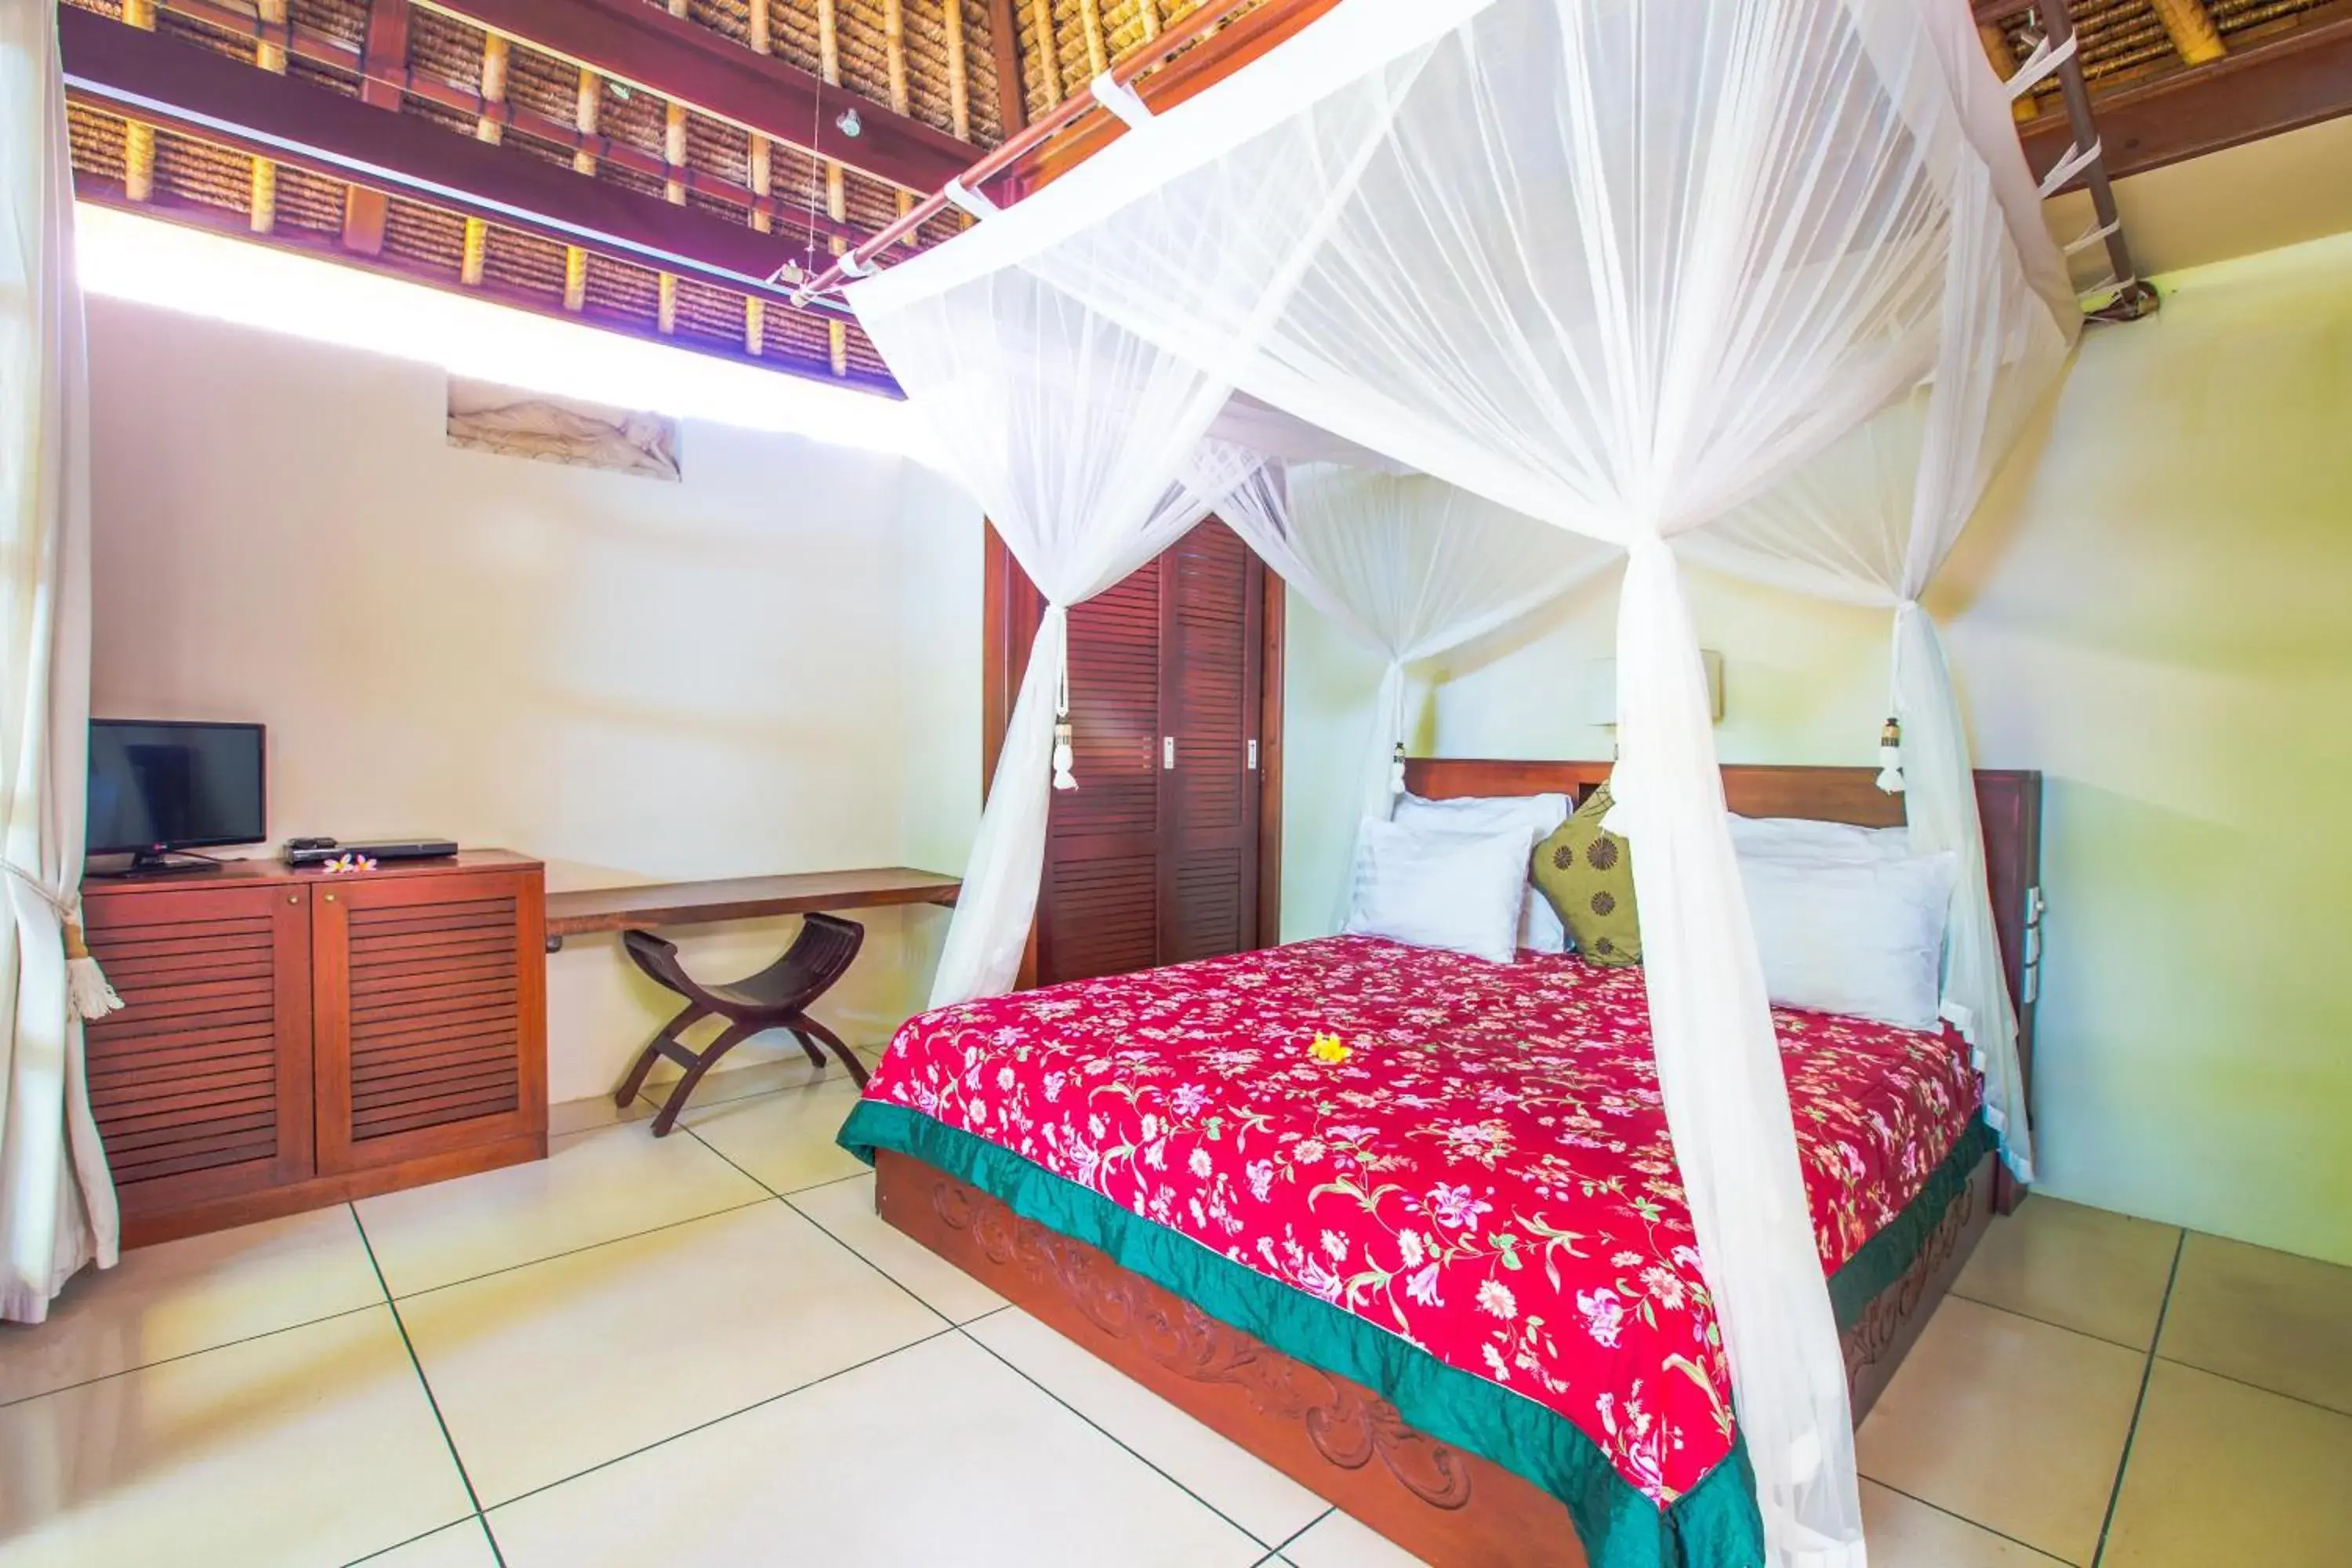 Bed in Bali Harmony Villa